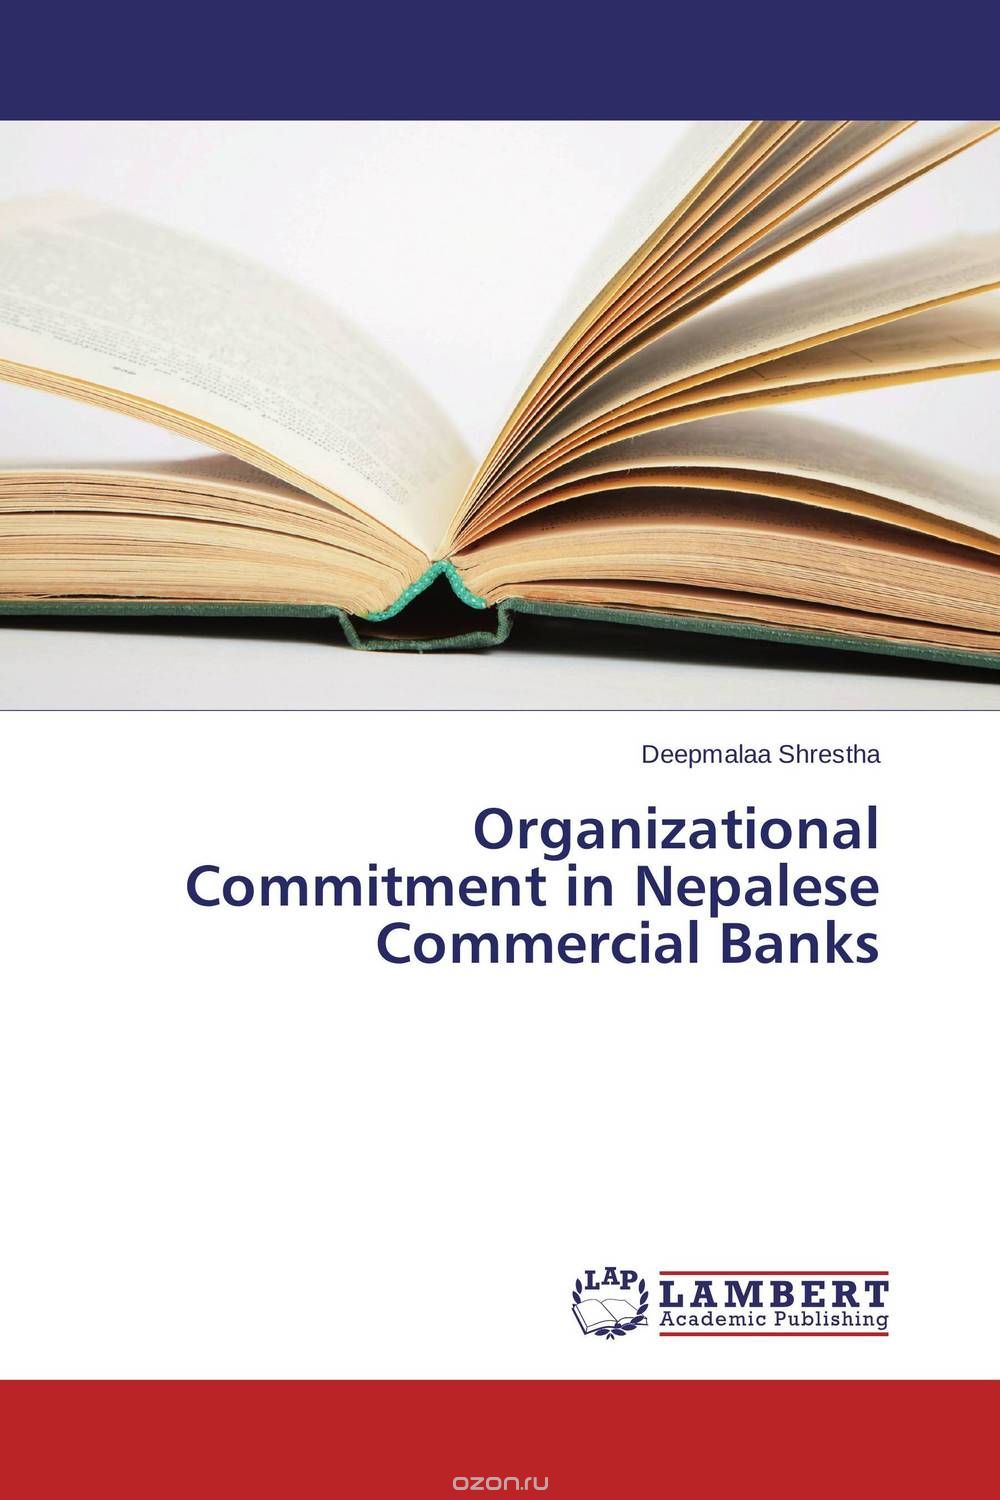 Скачать книгу "Organizational Commitment in Nepalese Commercial Banks"